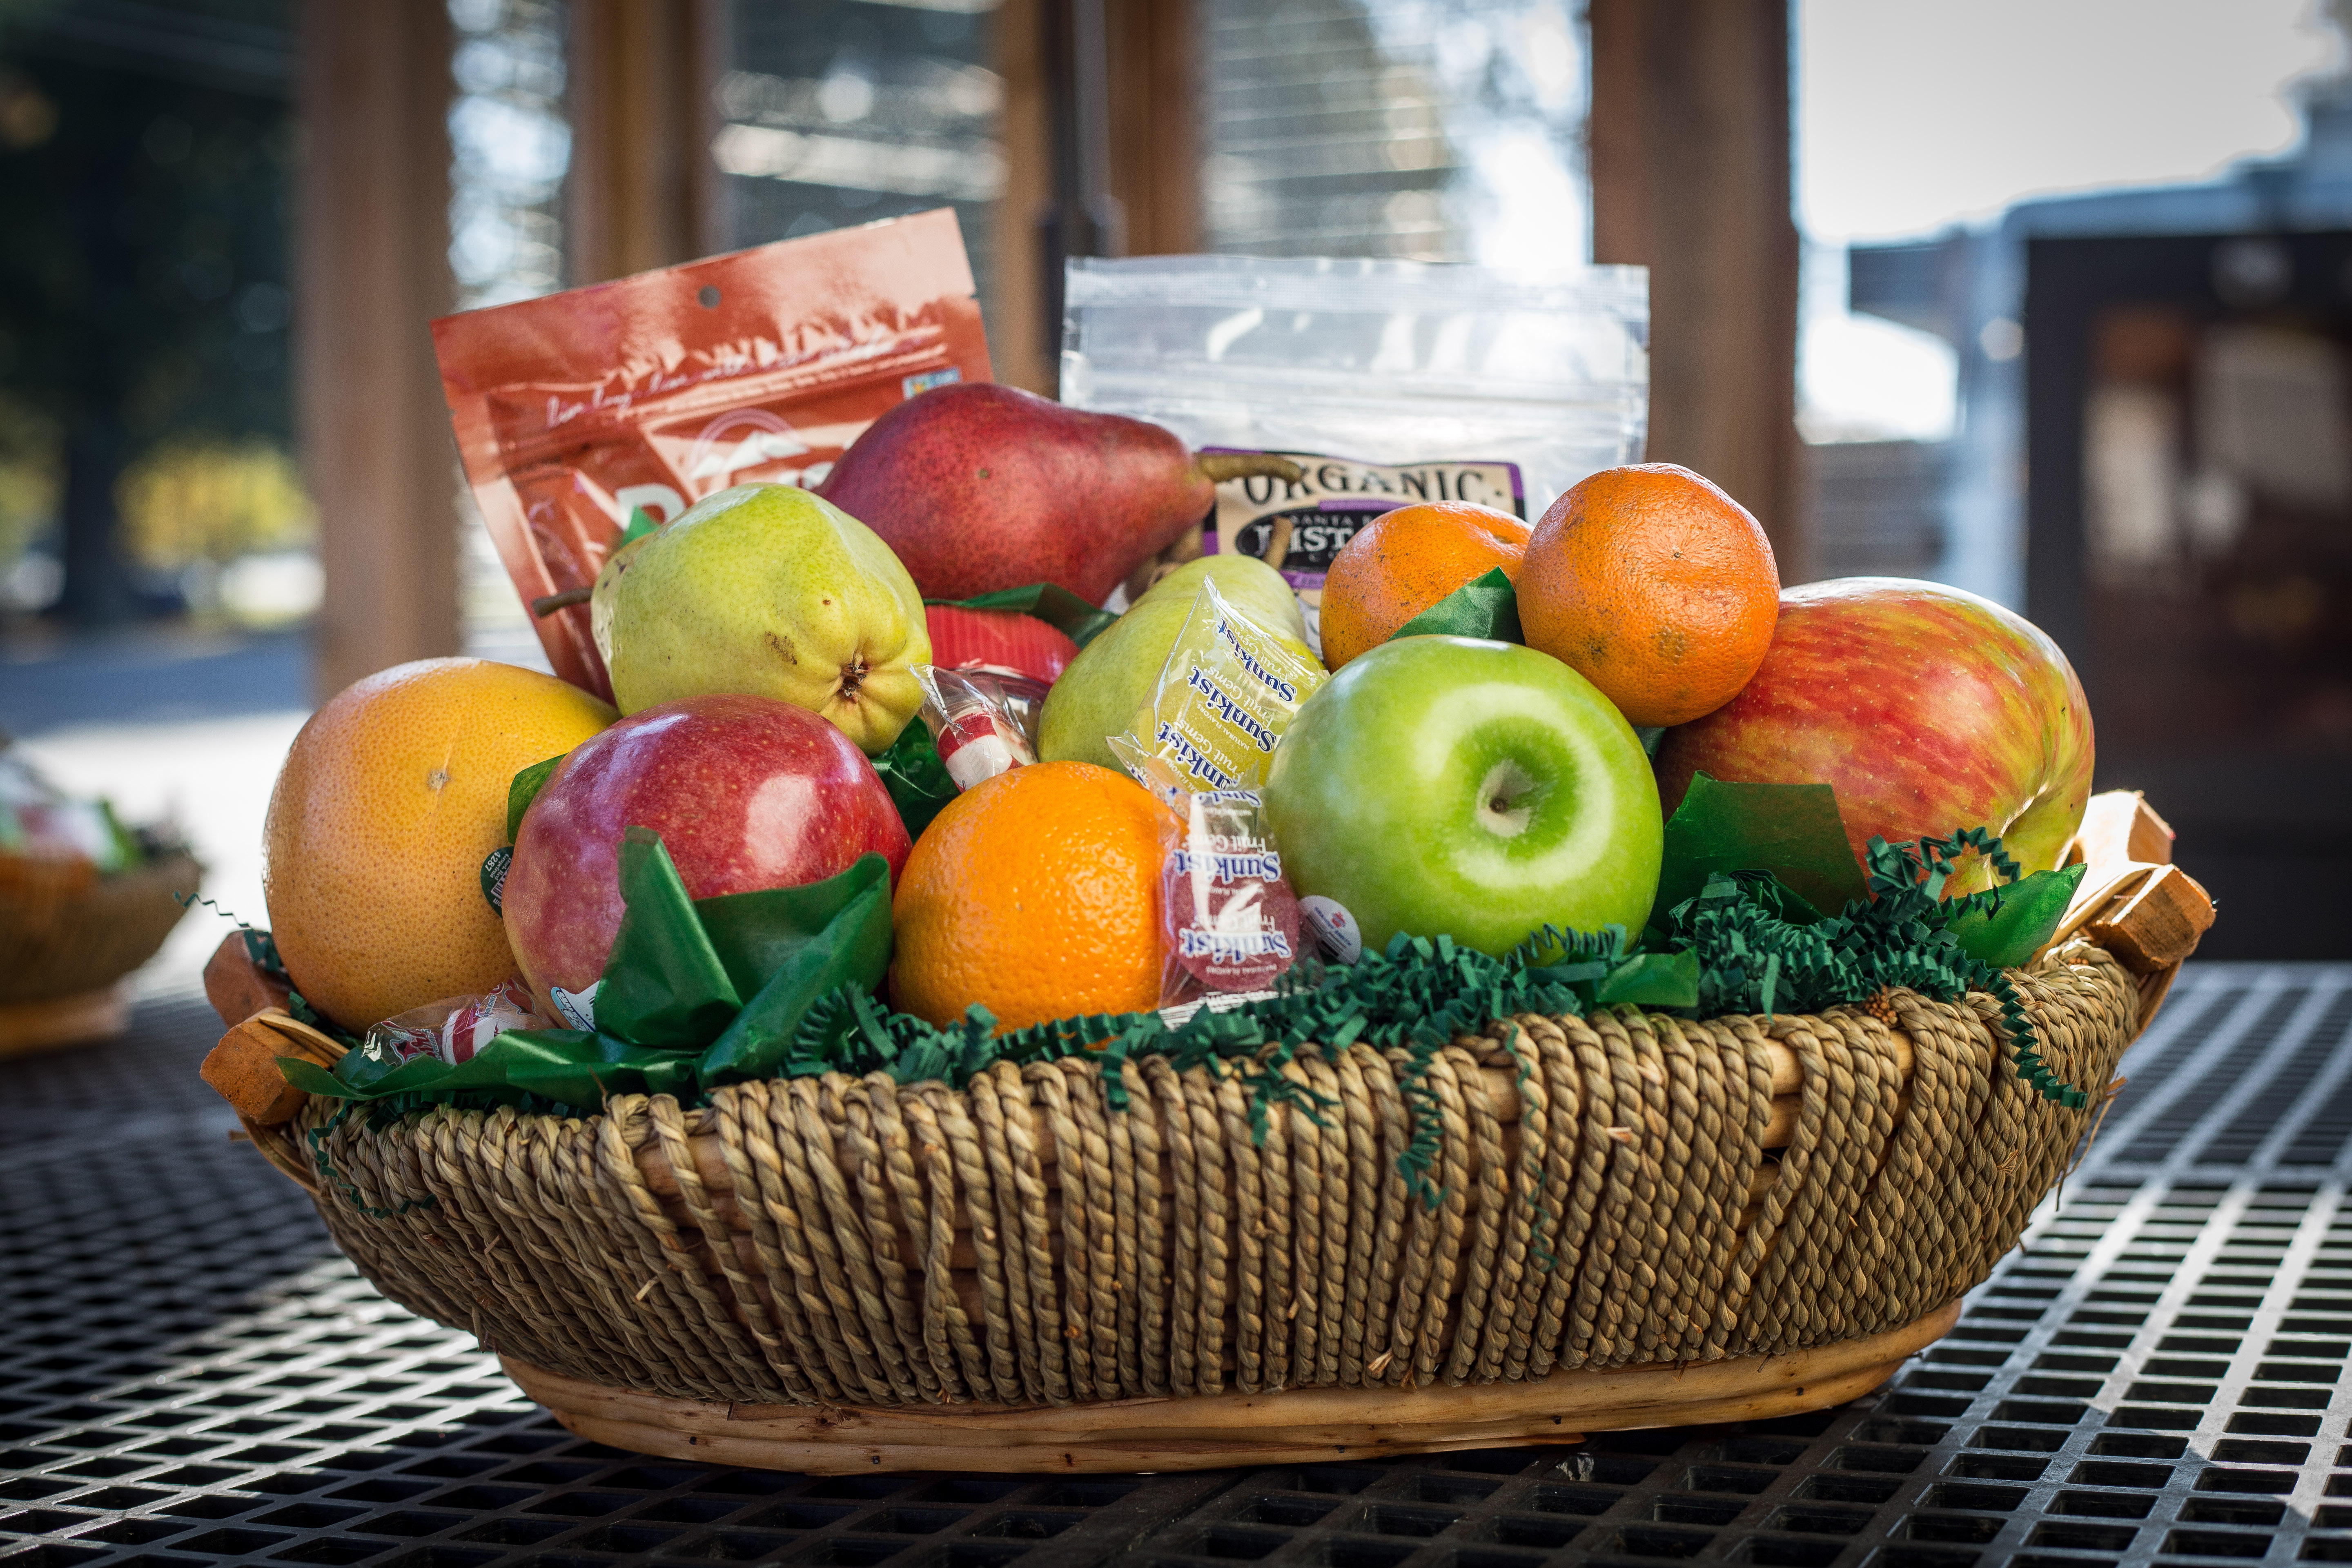 Midtown Market fruit and gift basket